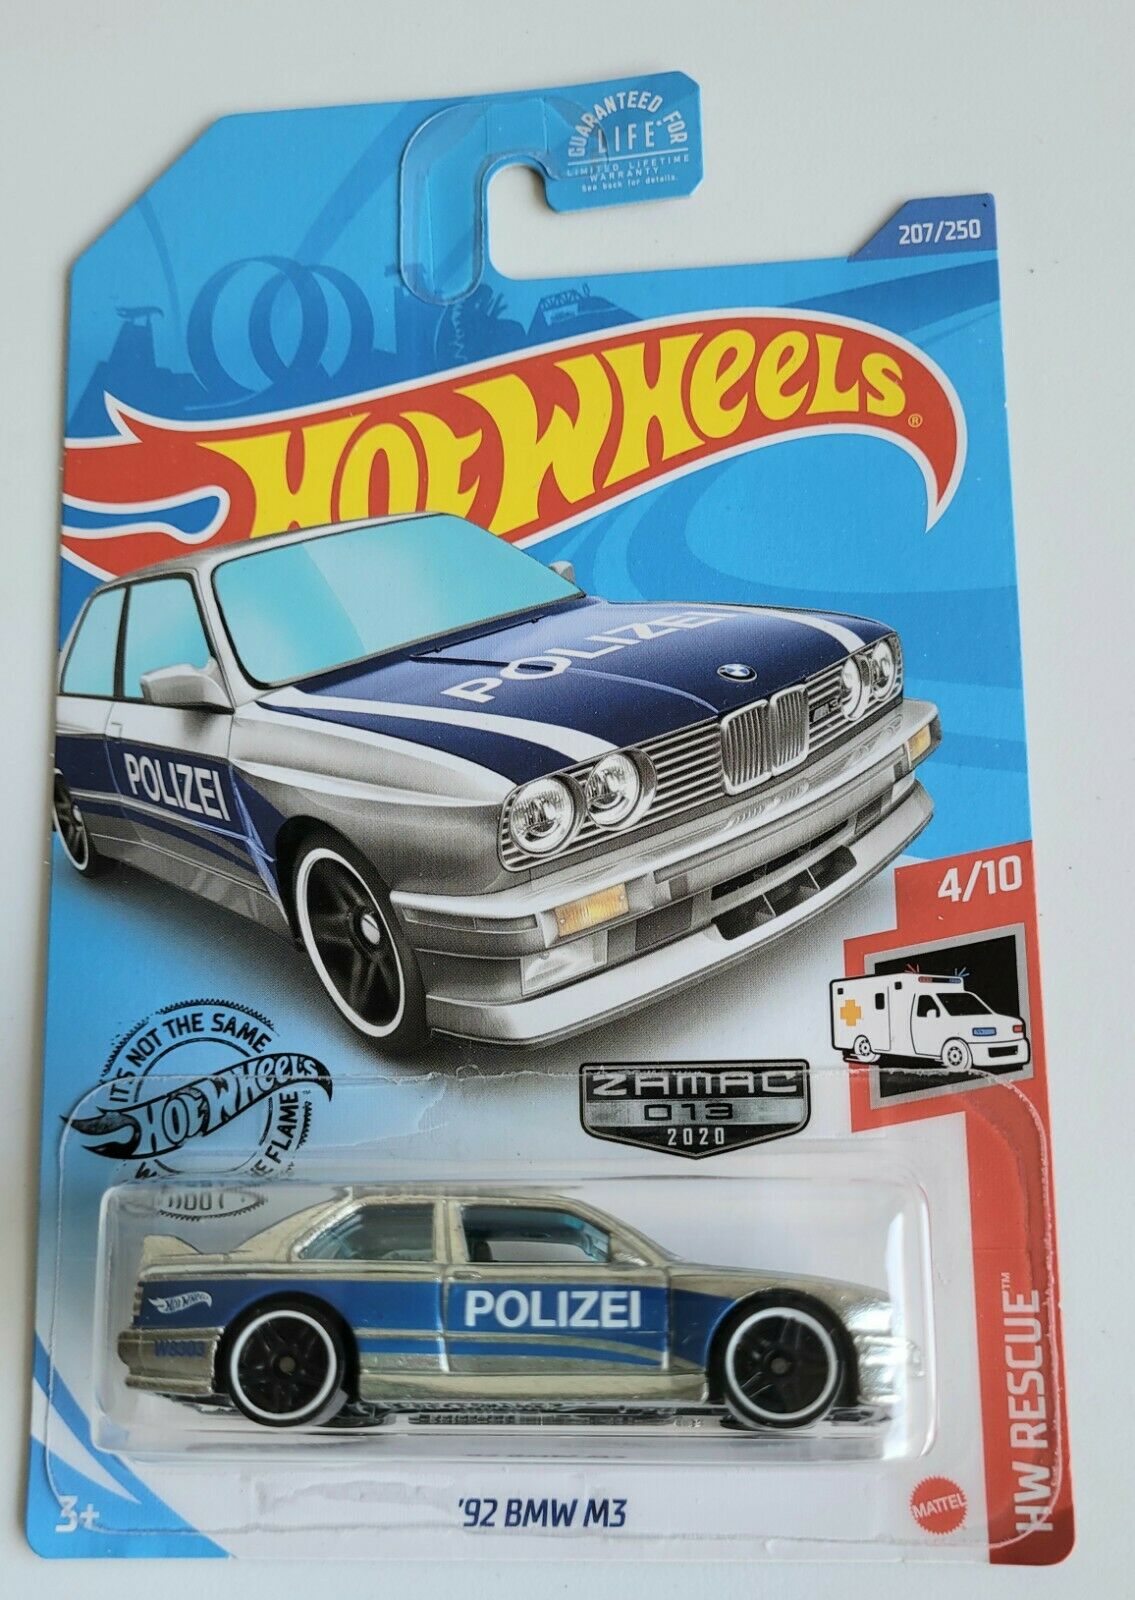 Polizei '92 BMW M3 Lot of 4 2020 Hot Wheels Rescue #207 